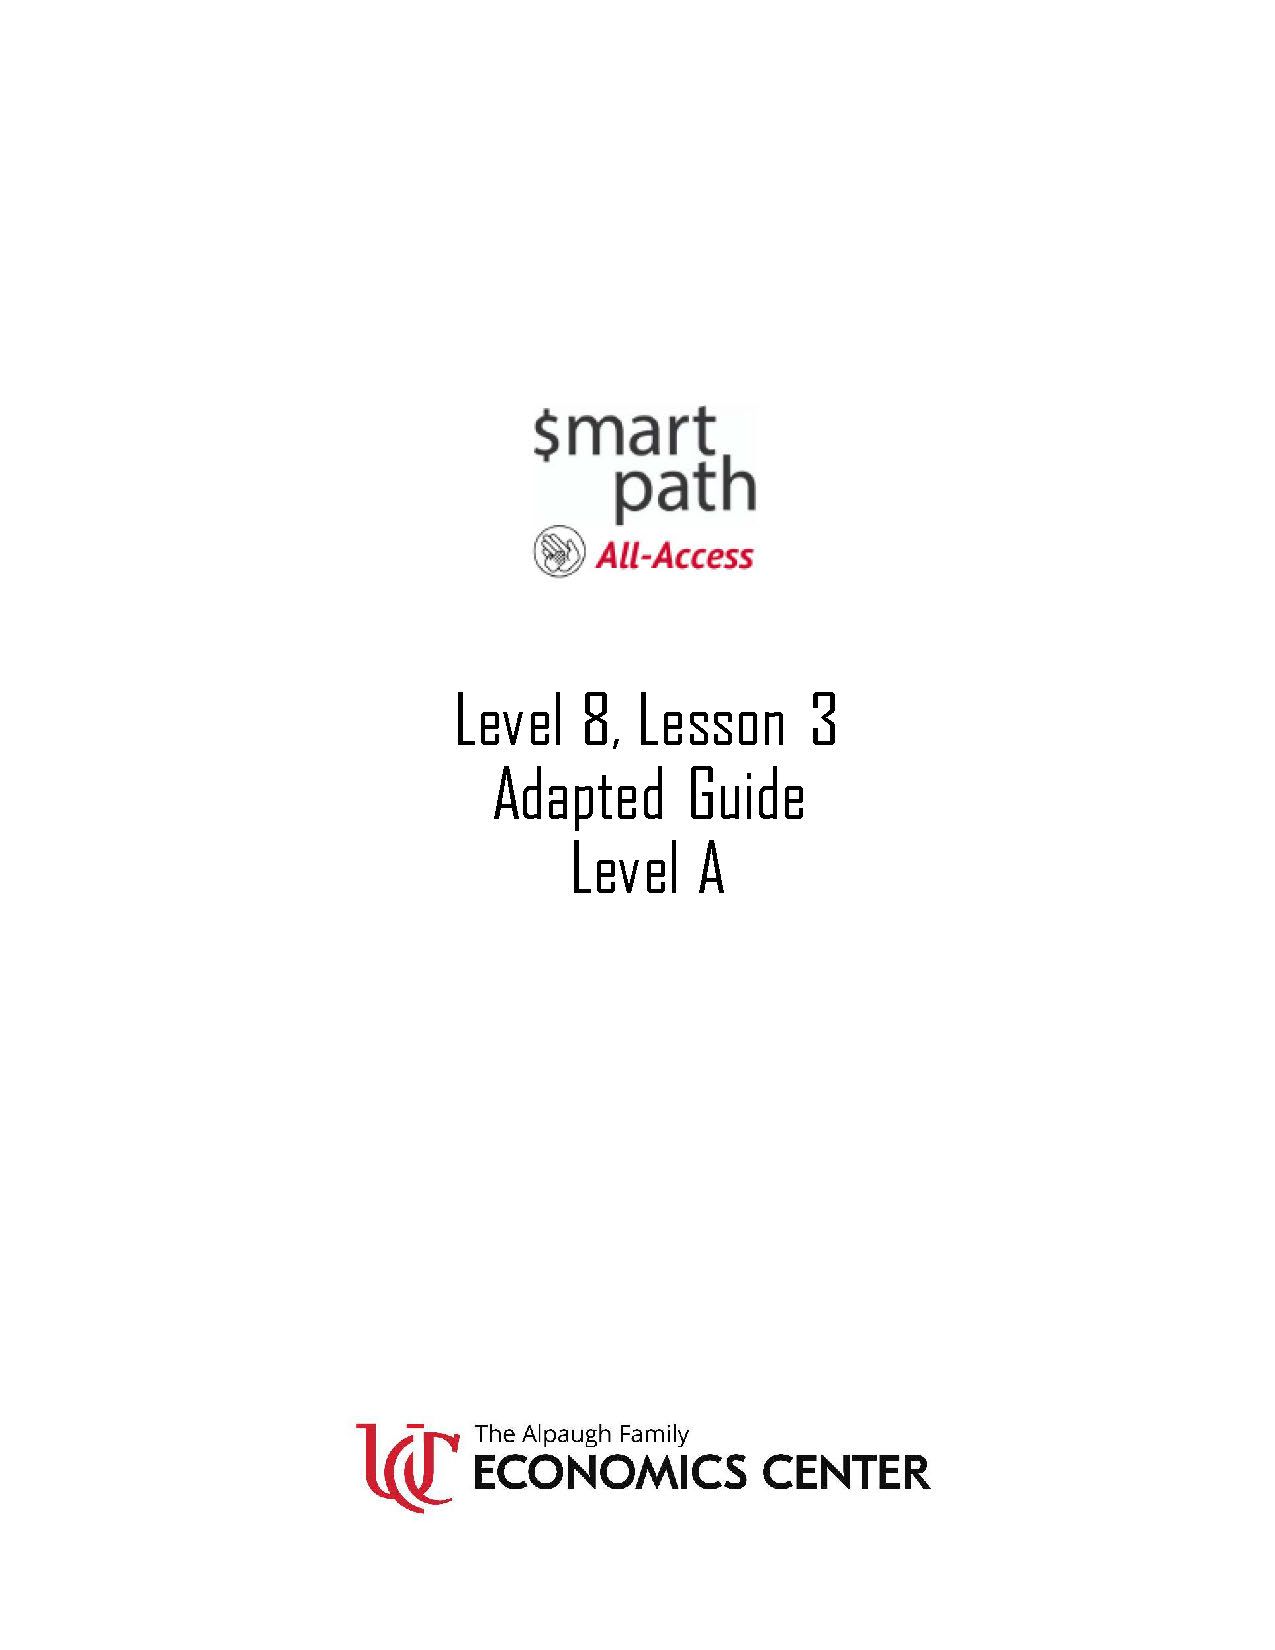 Level 8 Lesson 3 Cover